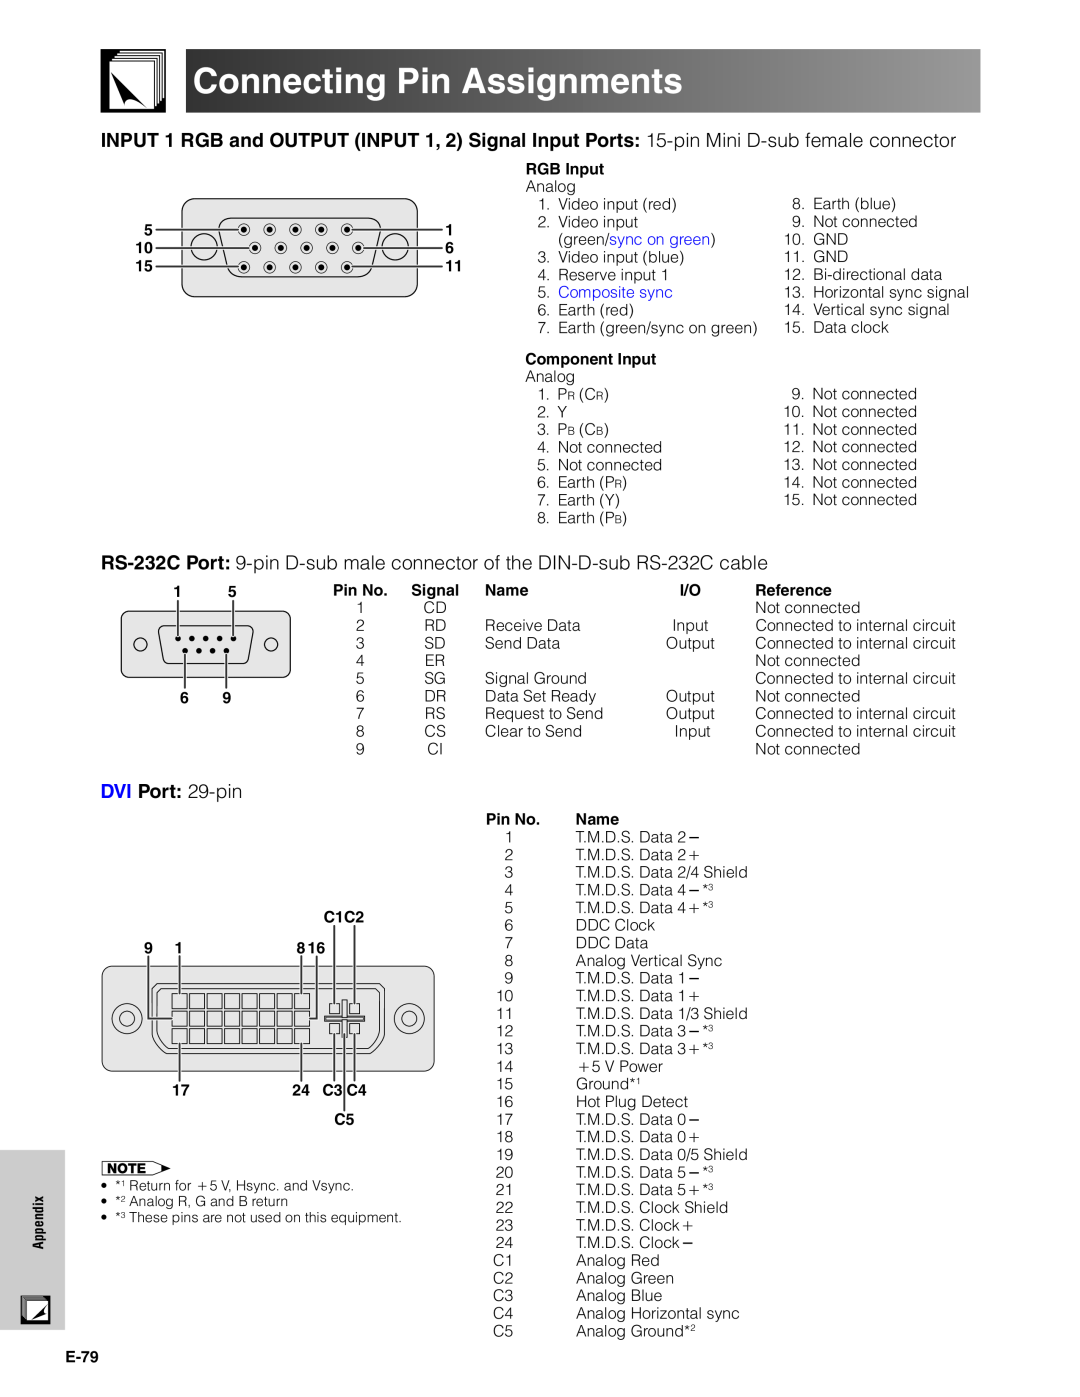 Sharp XG-V10XU operation manual Connecting Pin Assignments, DVI Port 29-pin 